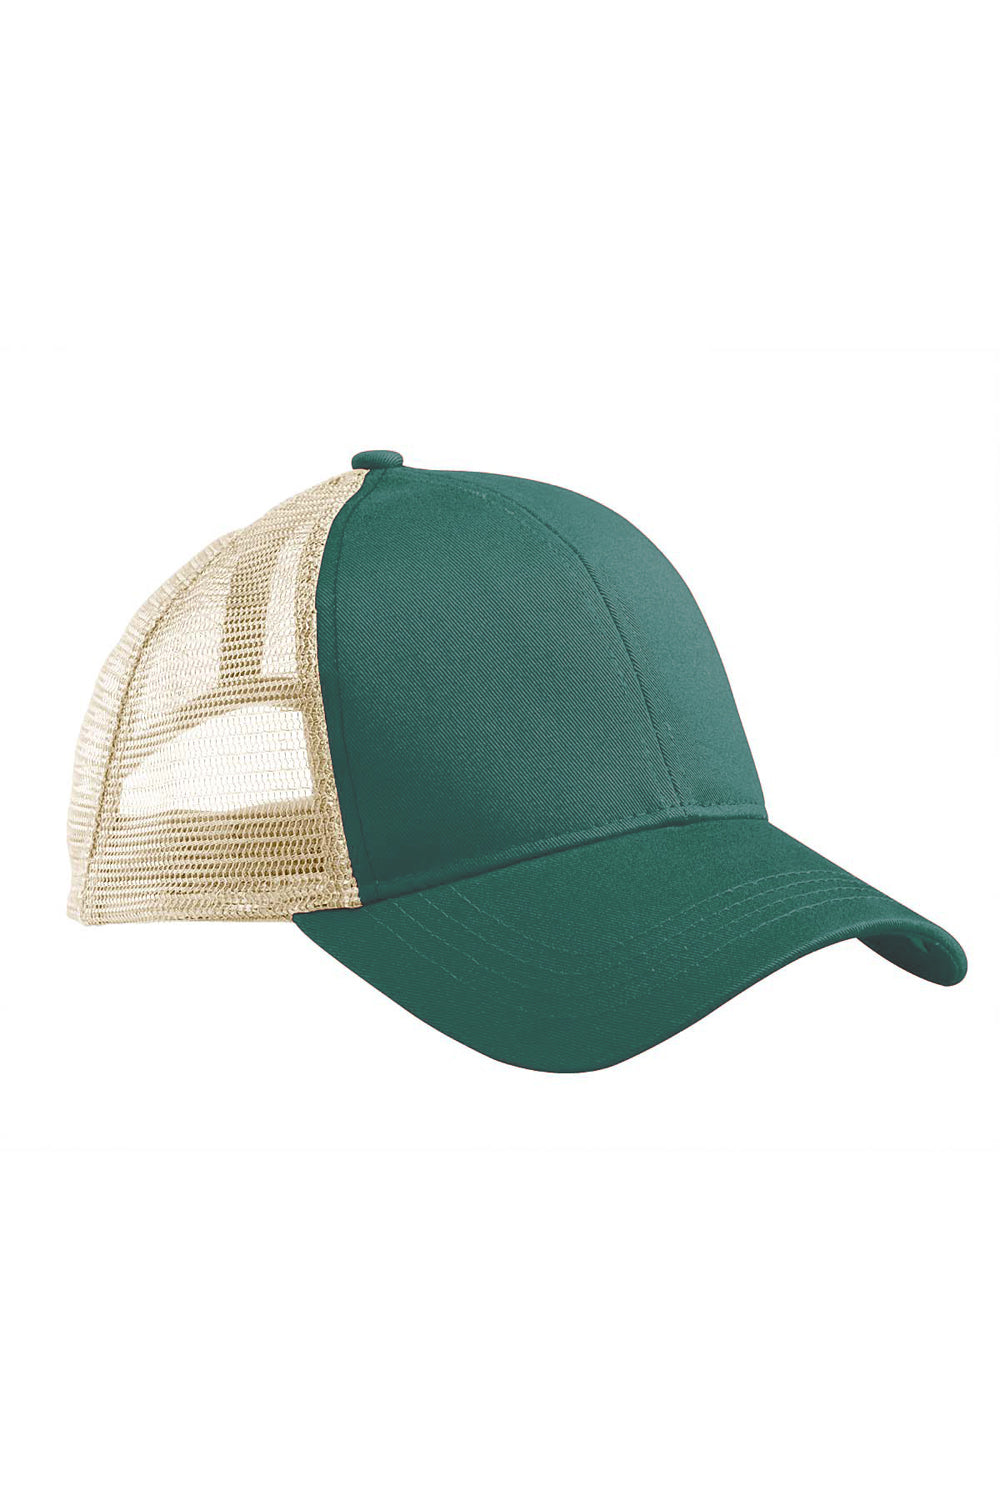 Econscious EC7070 Mens Adjustable Trucker Hat Emerald Forest Green/Oyster Front